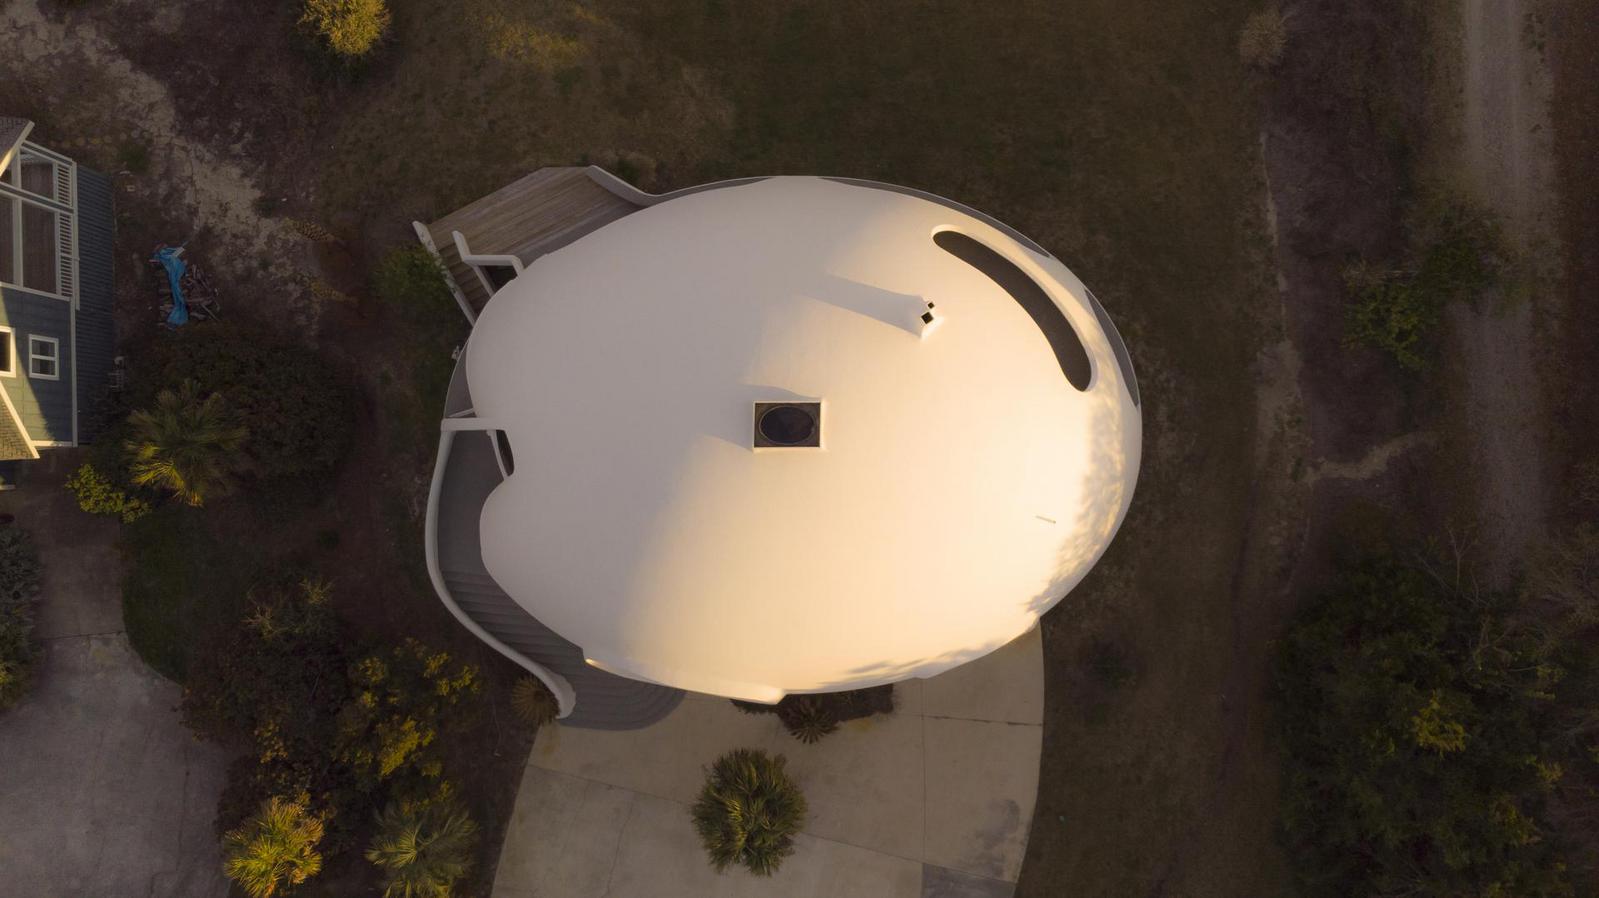 Elliptical dome shape.